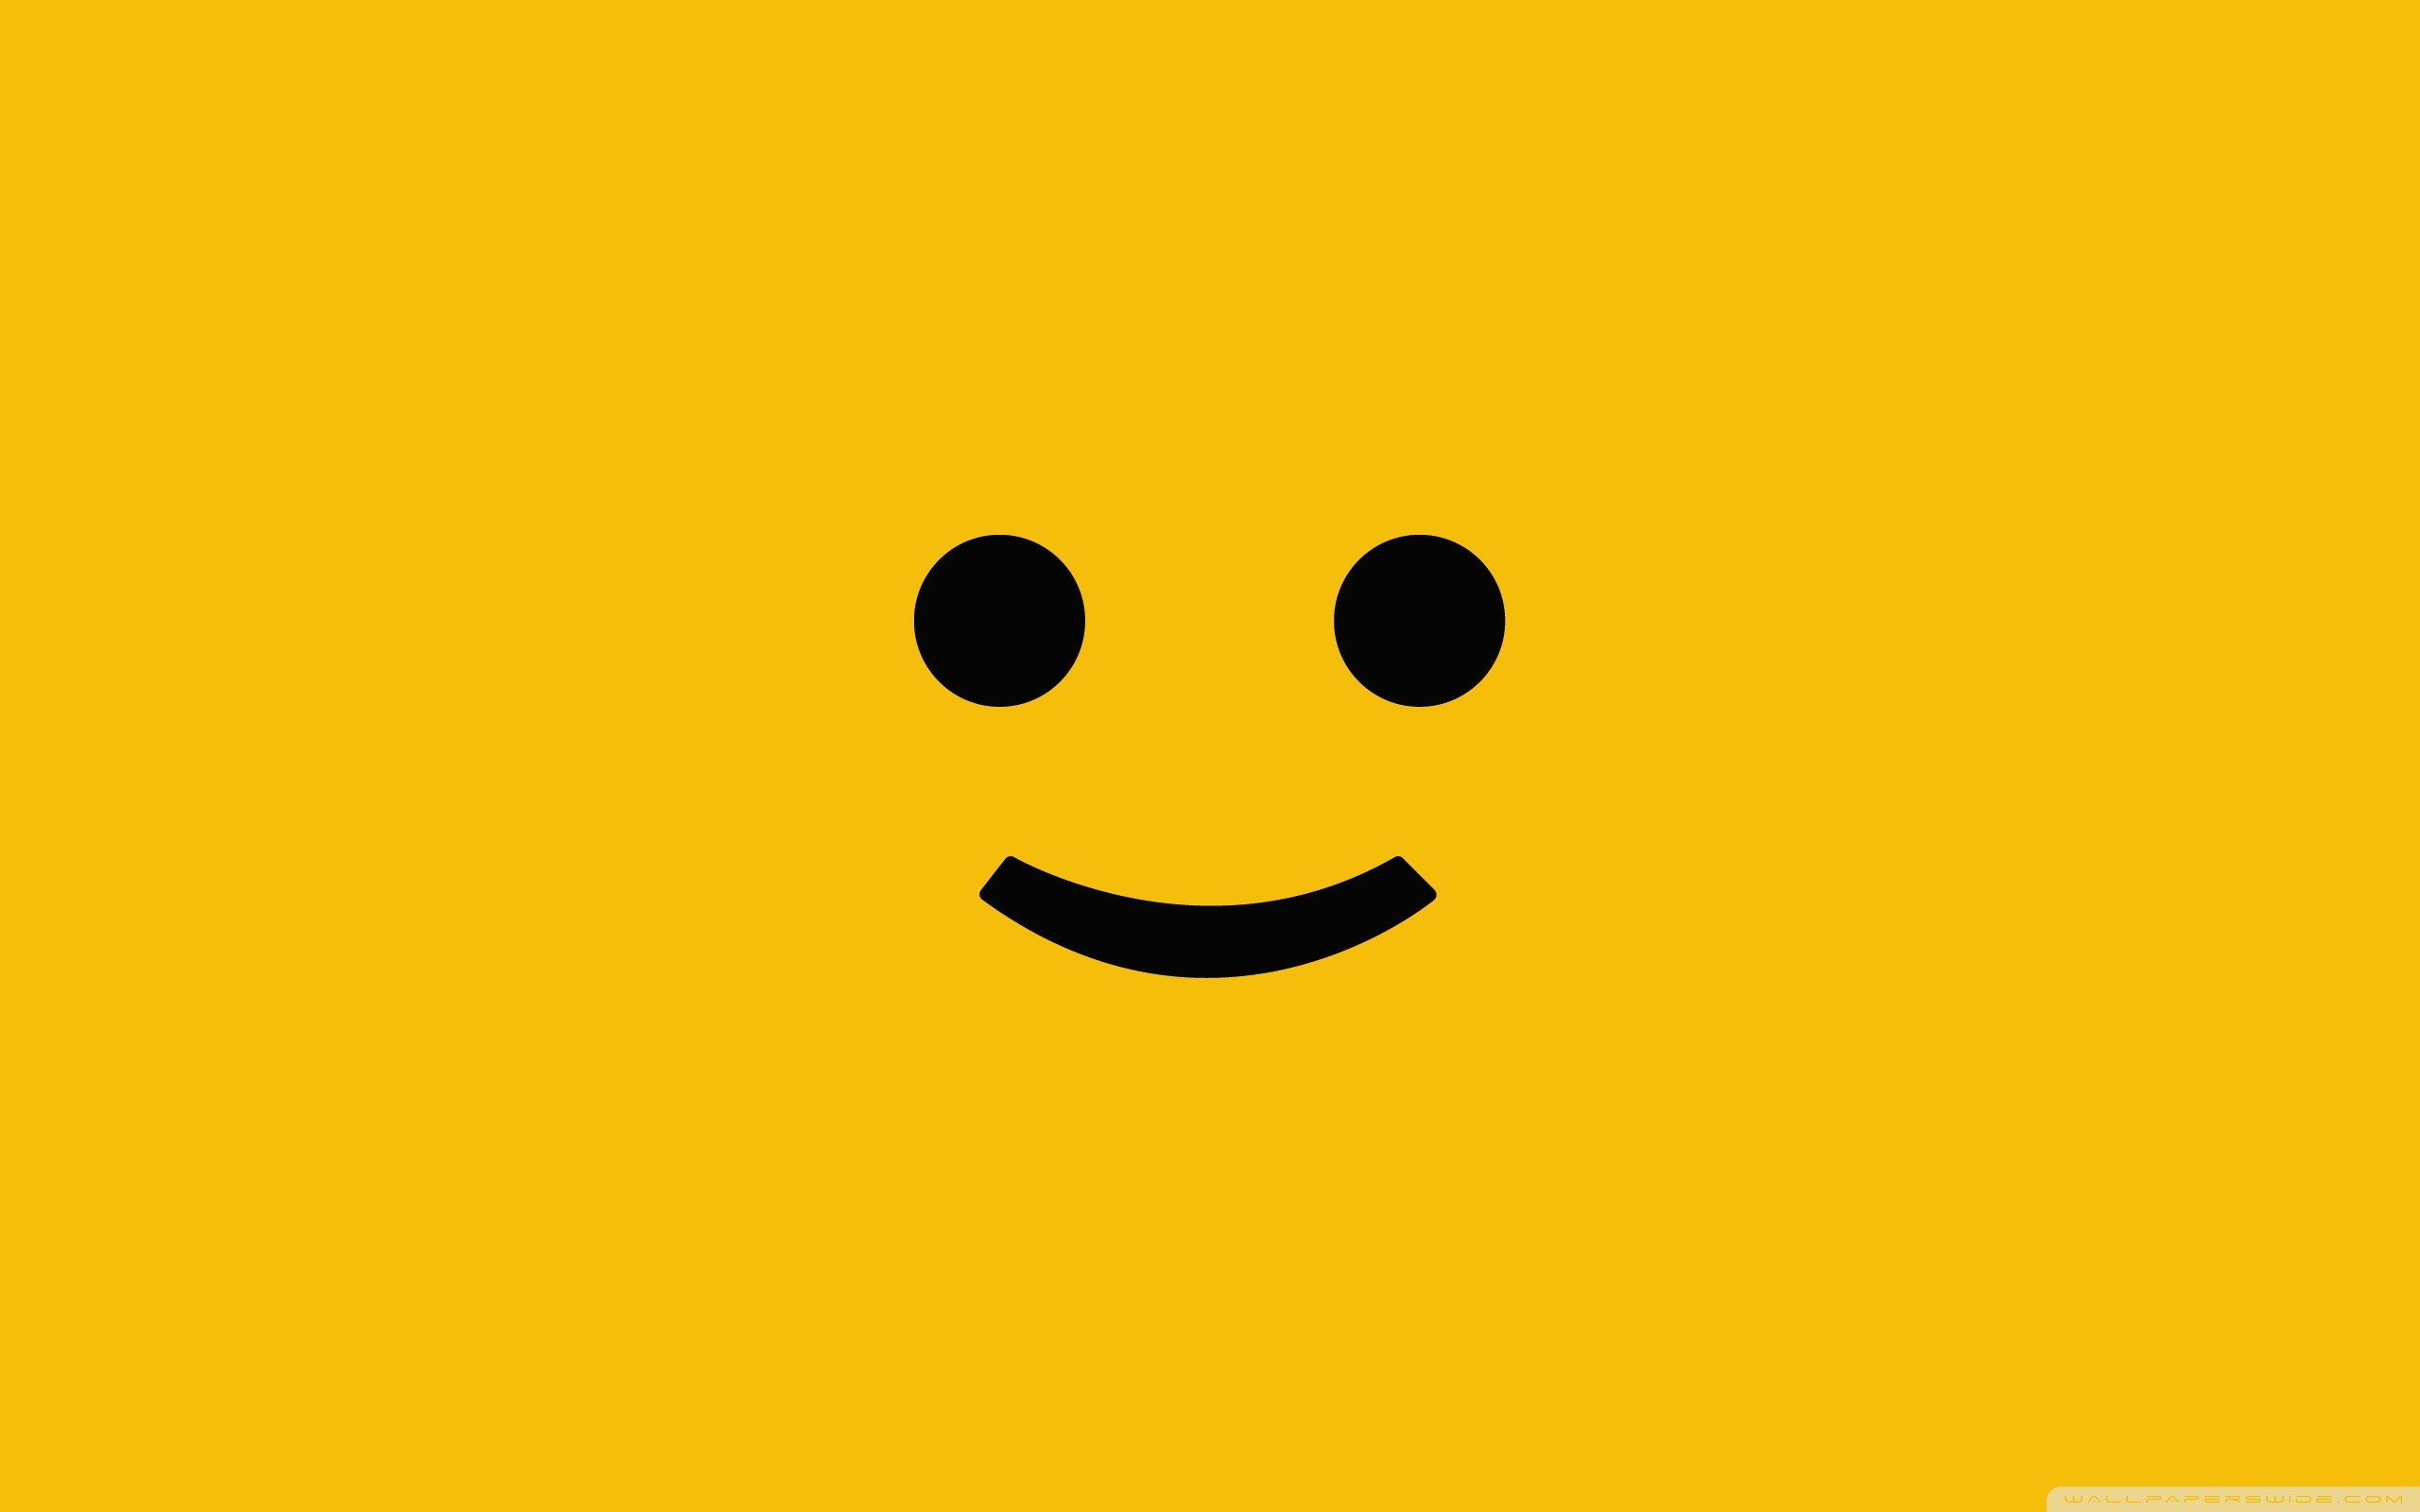 pittsburgh steelers iphone wallpaper,emoticon,gelb,lächeln,smiley,orange